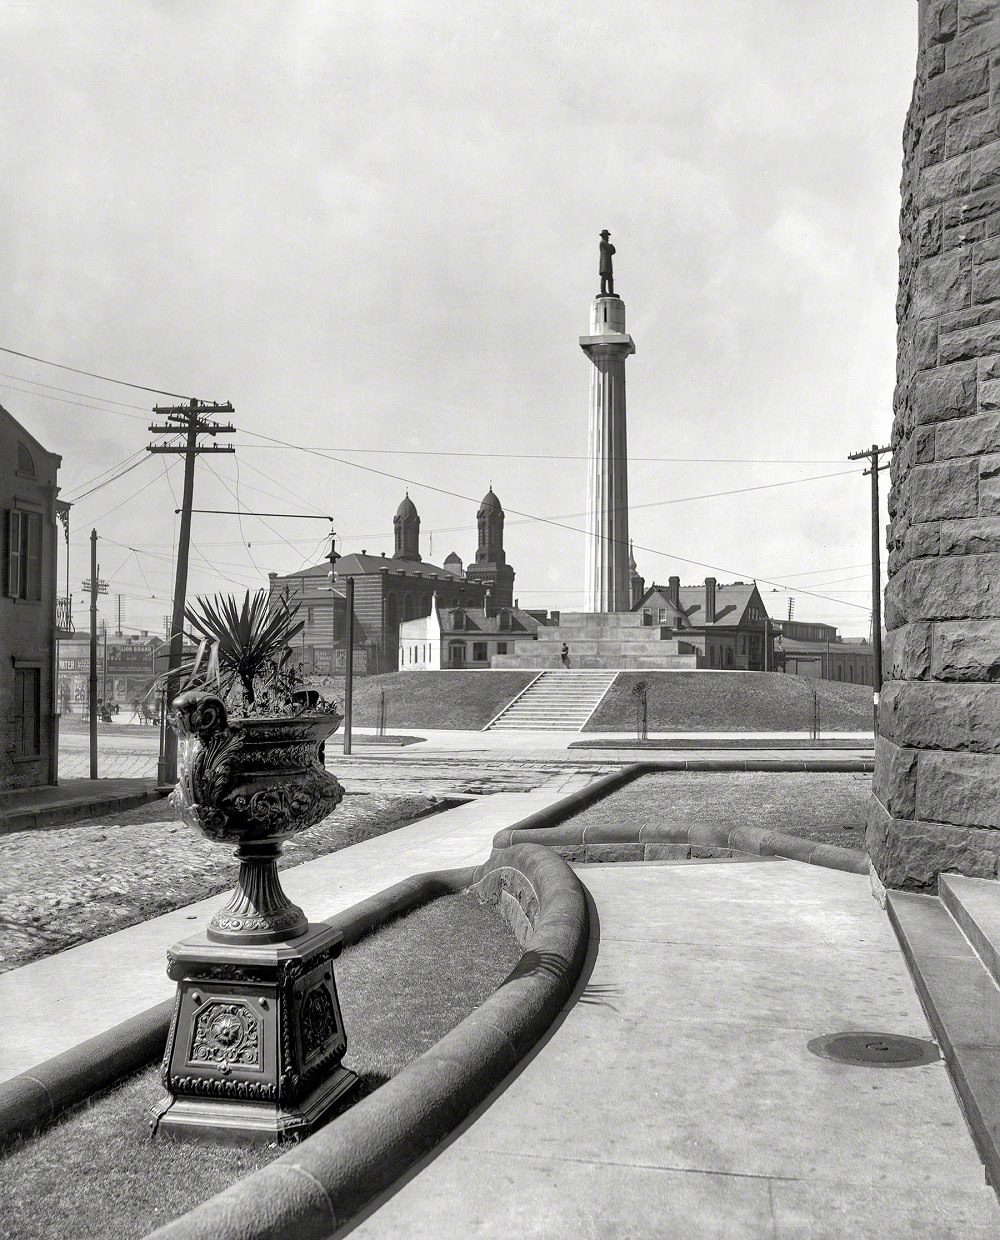 General Lee monument, Tivoli Circle, St. Charles Avenue, New Orleans circa 1900